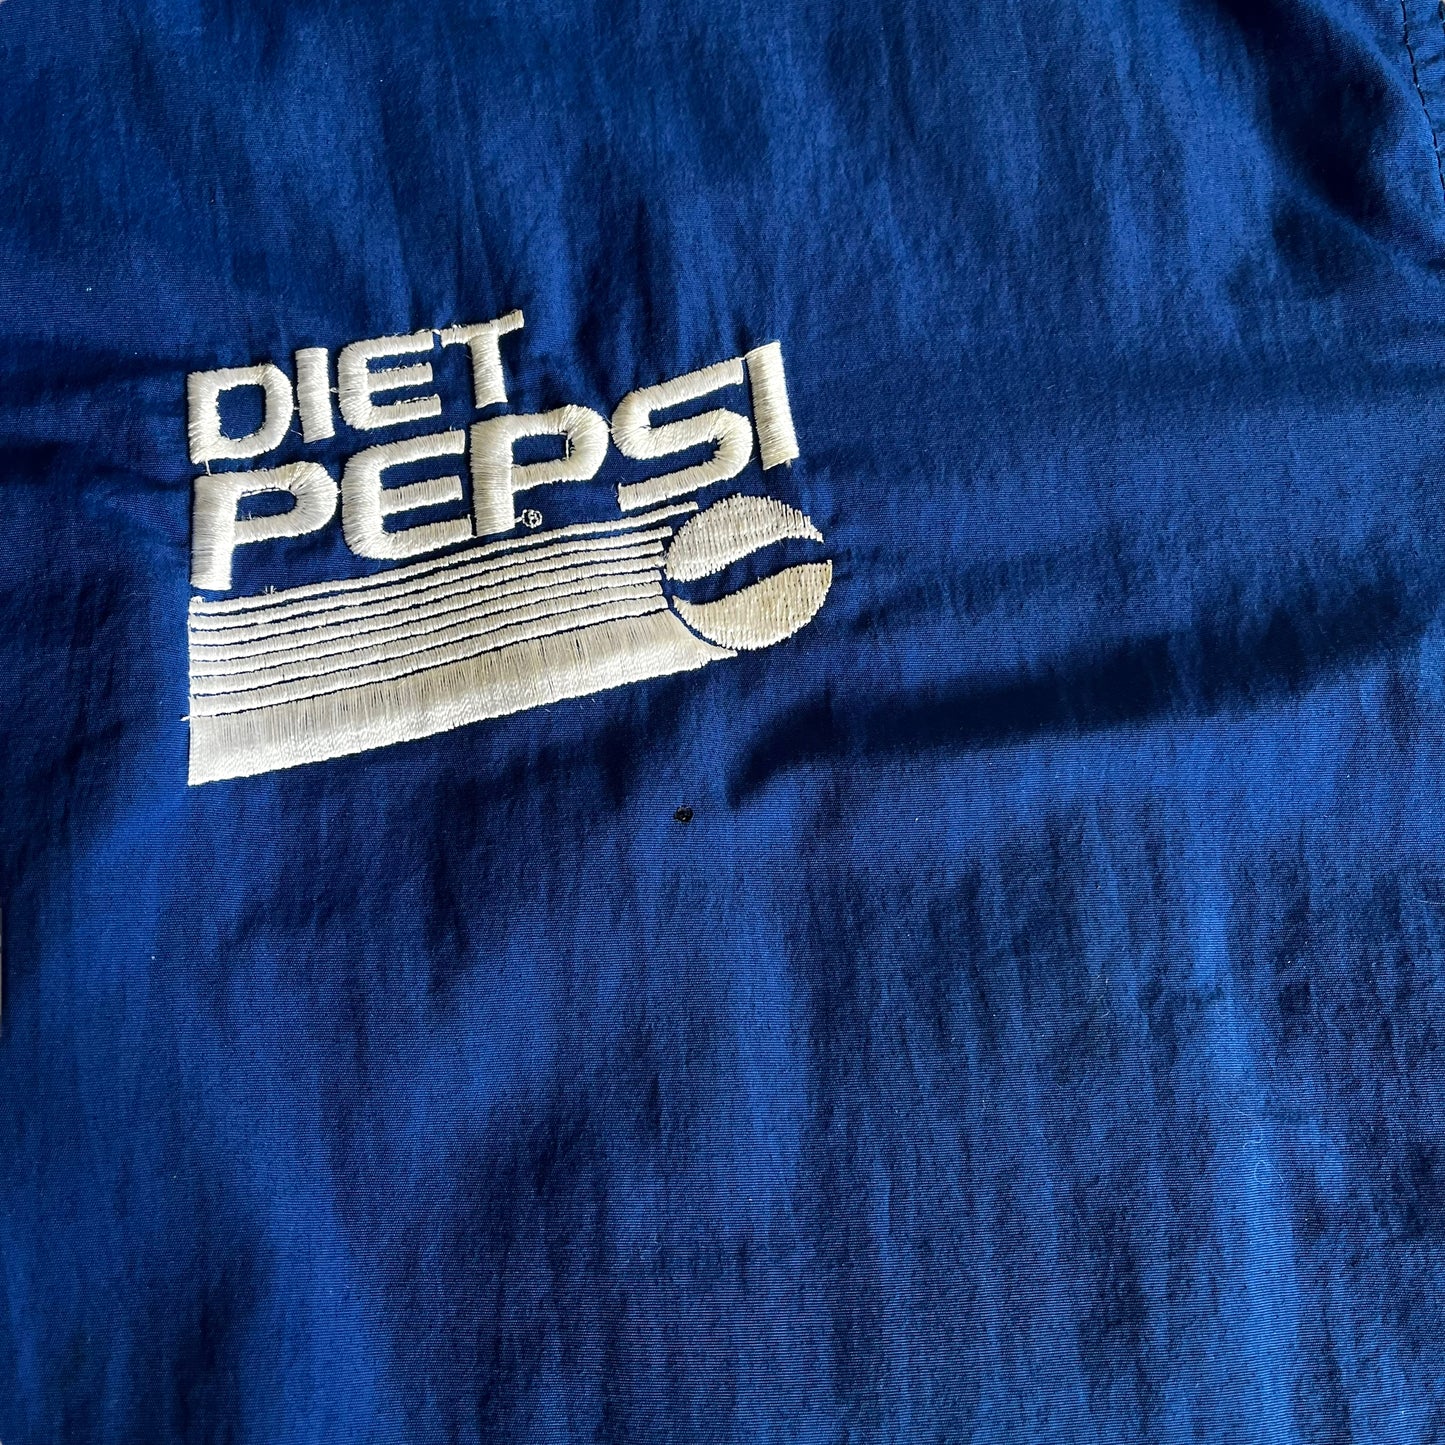 Vintage 90s Starter Diet Pepsi Promotional Blue Jacket Wear - Casspios Dream